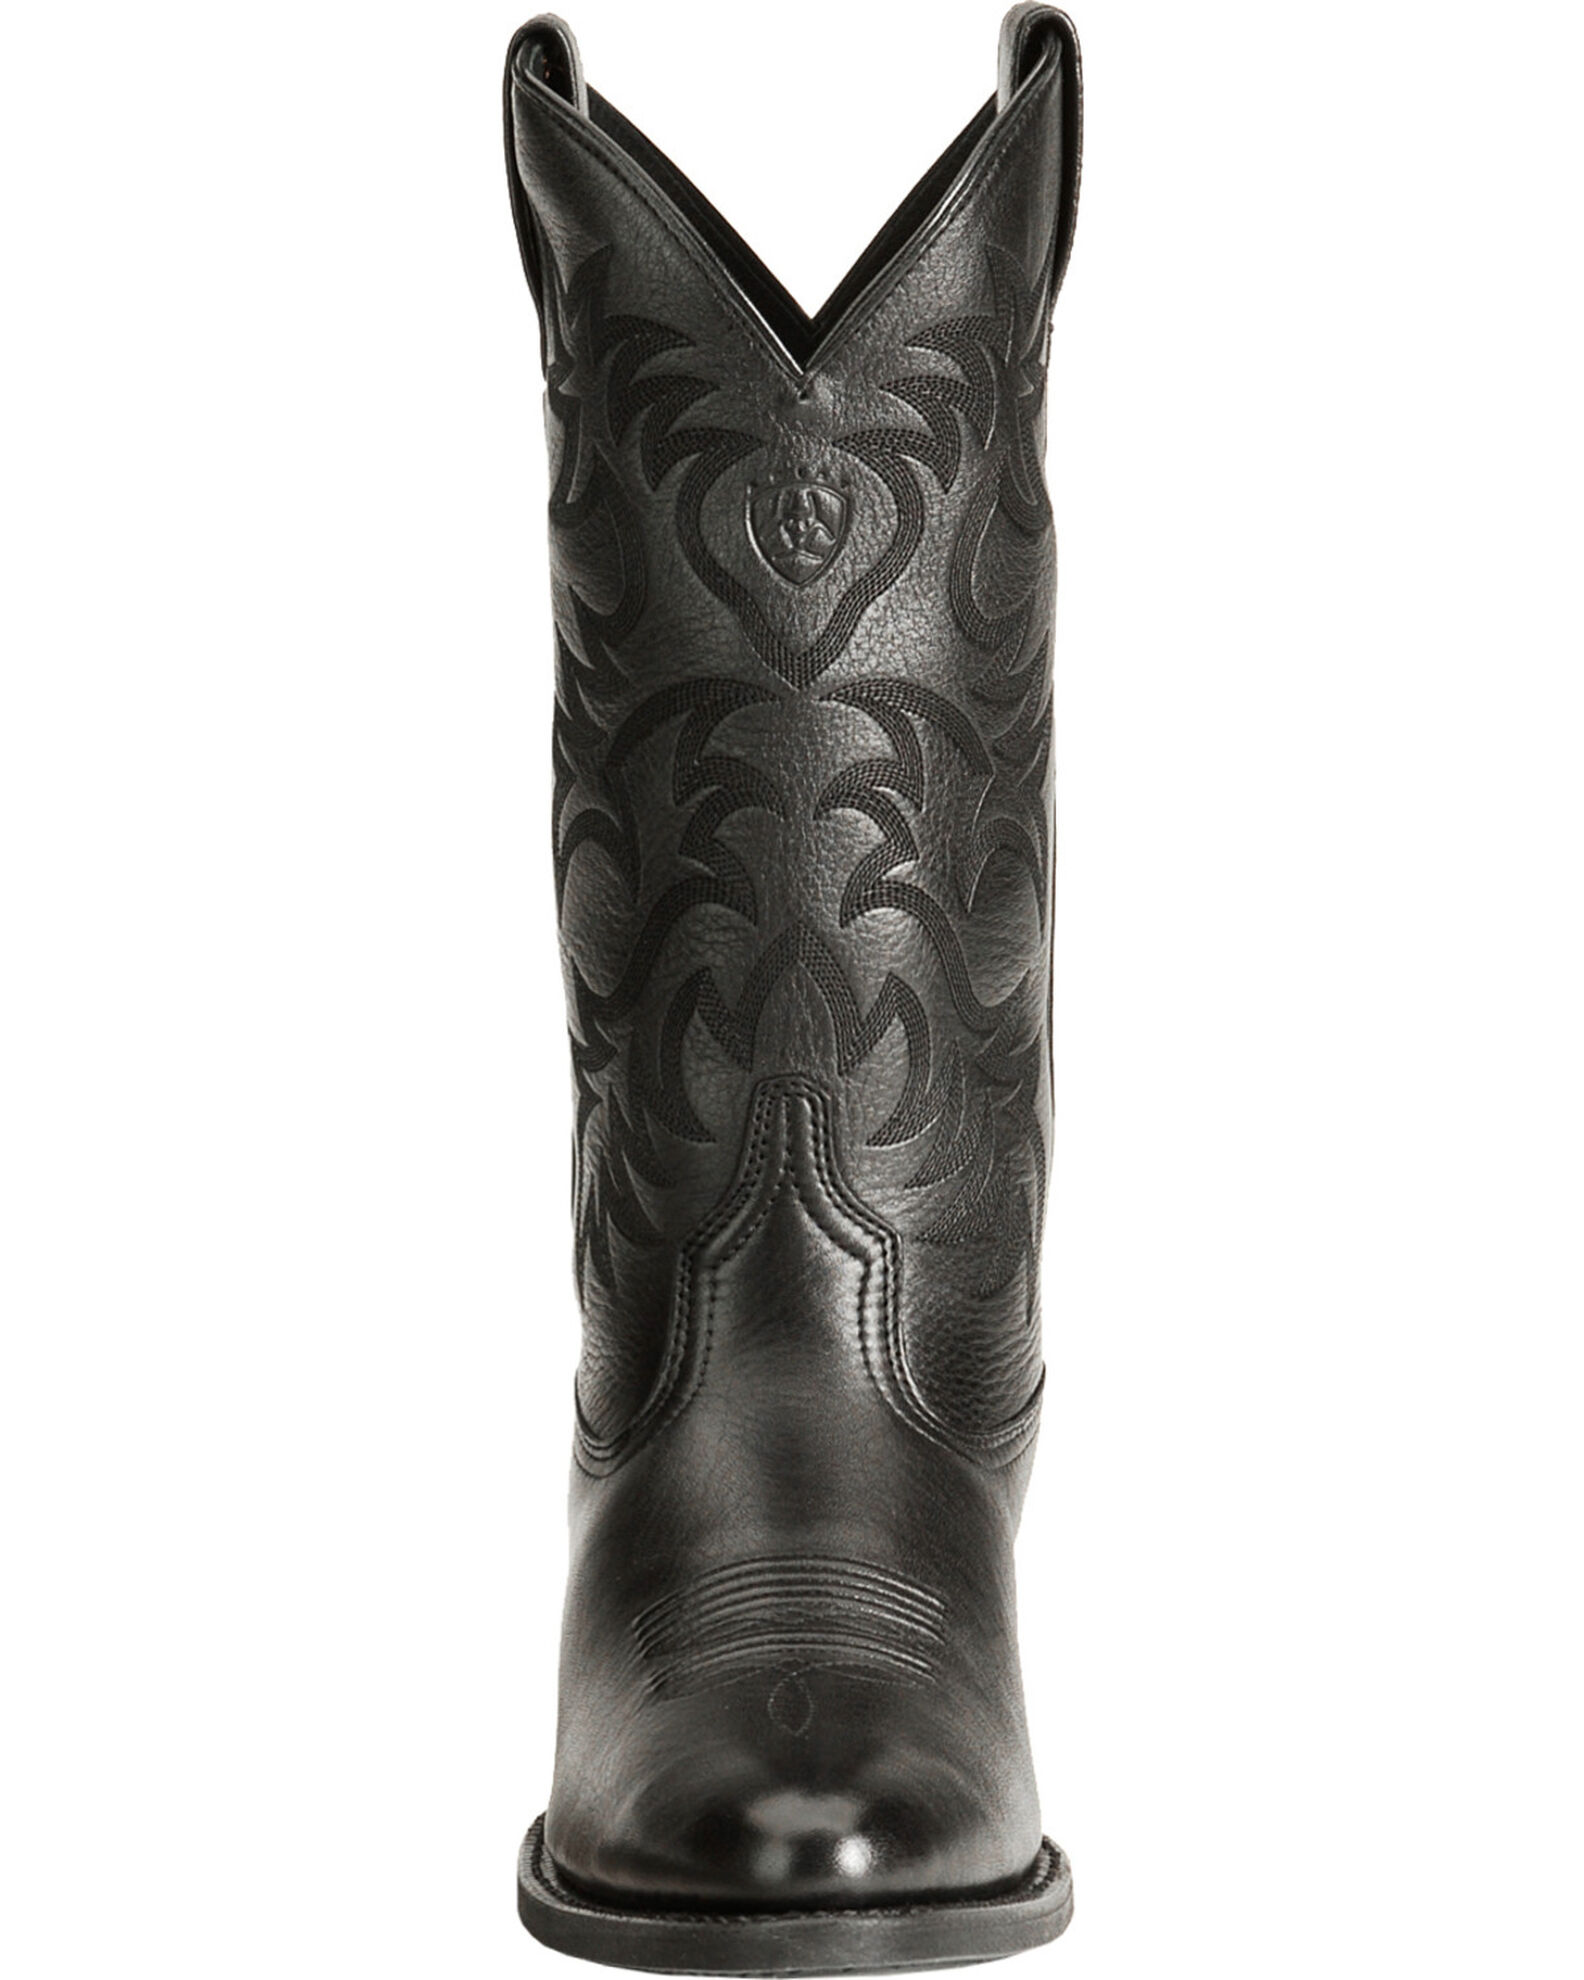 Product Name: Ariat Men's Heritage Deertan Western Performance Boots ...